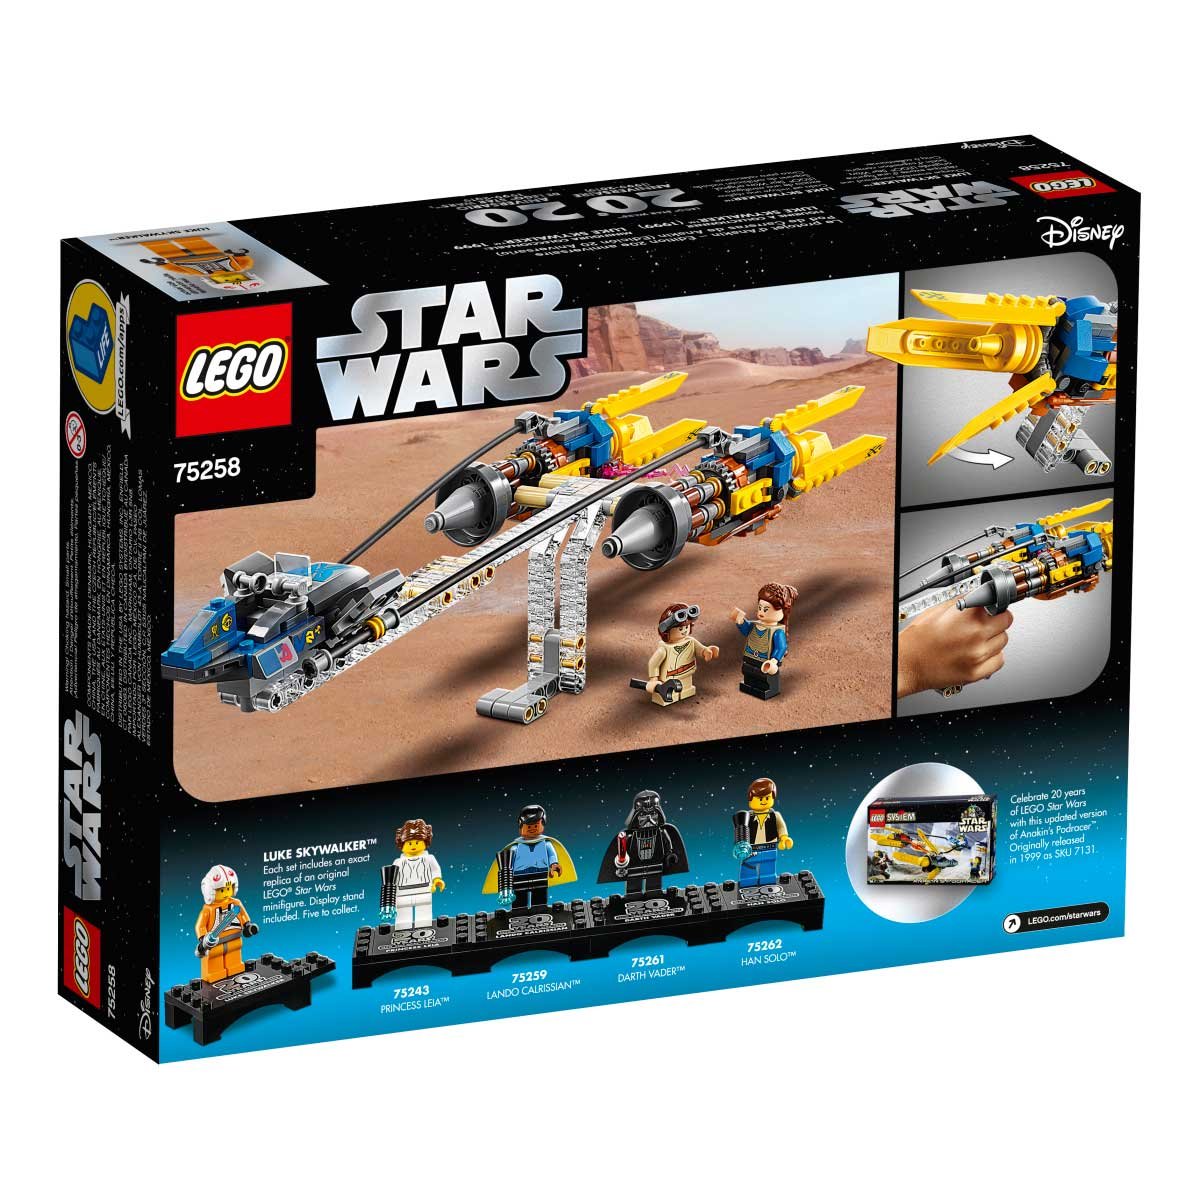 Star Wars Tm Anakin's Podracer&trade; &ndash; 20Th Anniversary Ed Lego